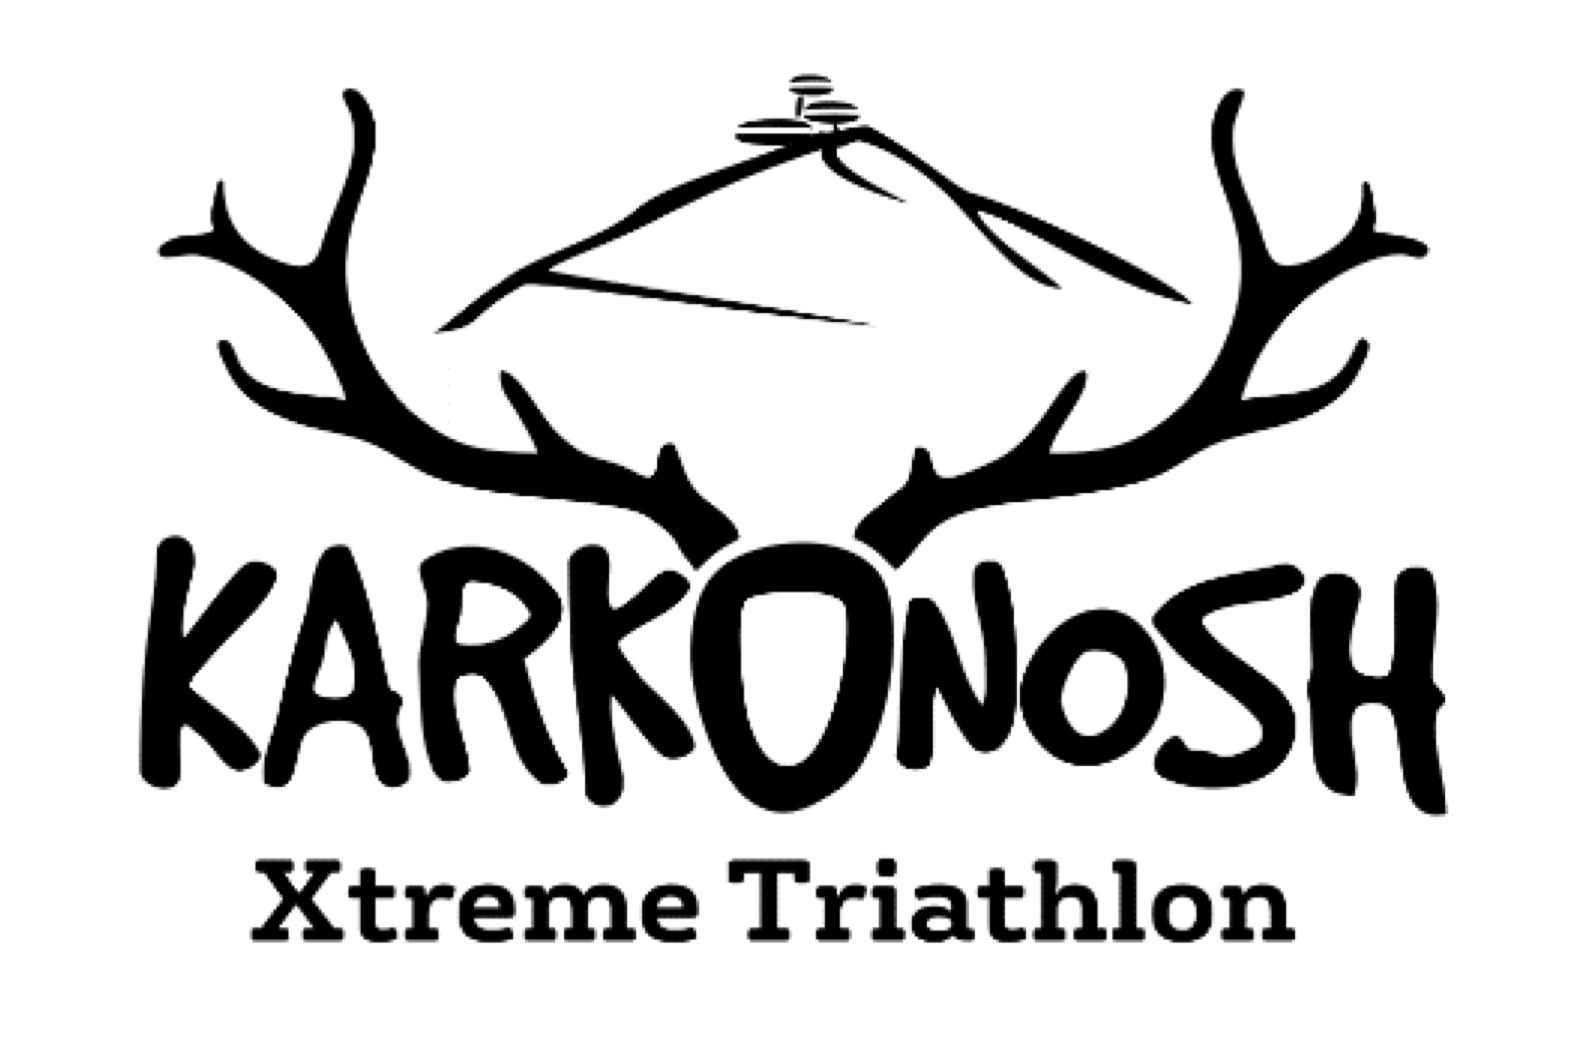 Poland Karkonosh Xtreme Triathlon